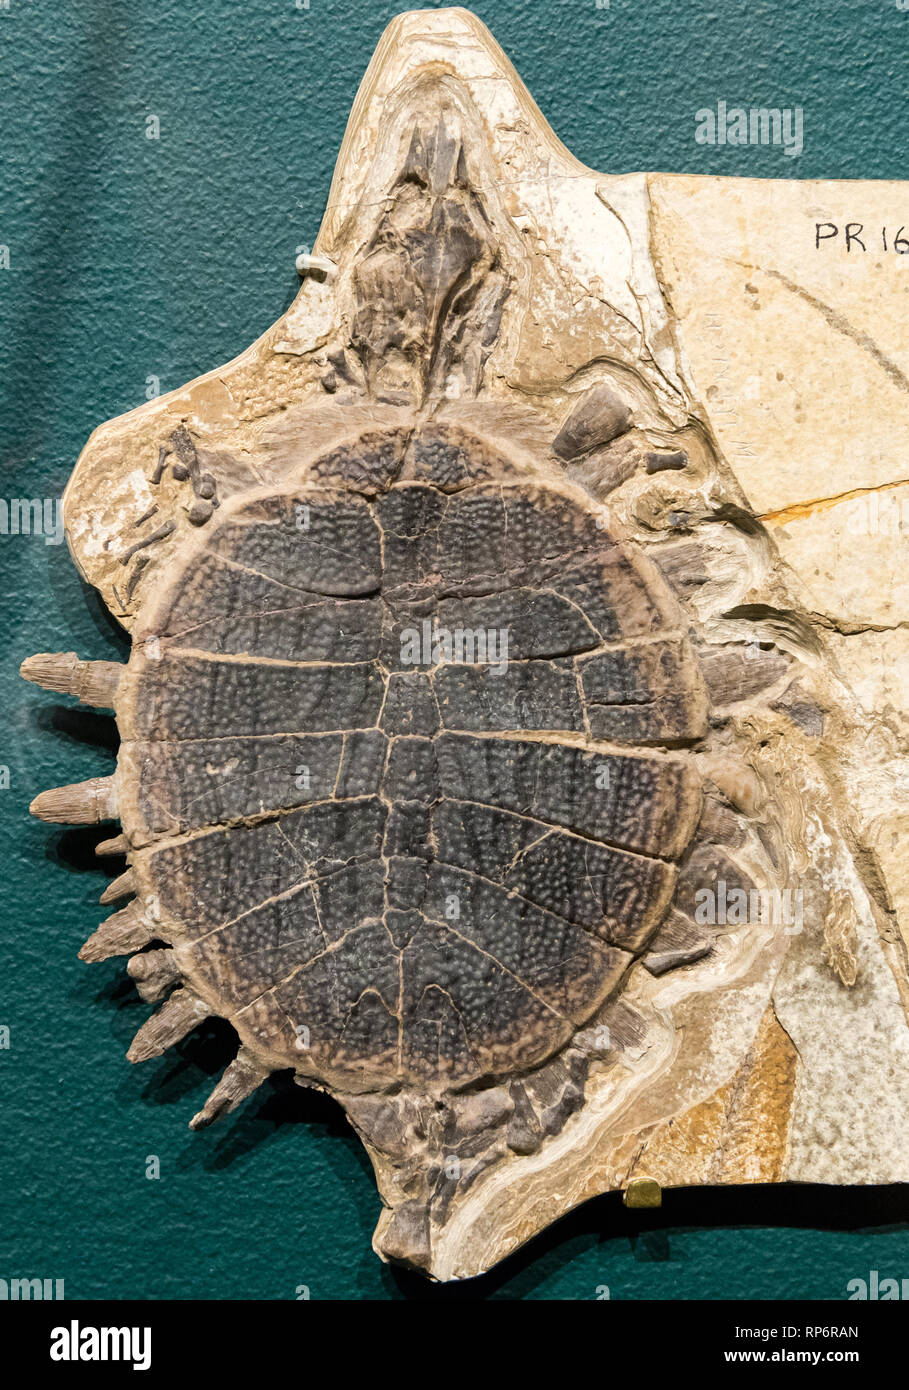 Fossil Soft-shelled Turtle (Plastomenus sp.) of Eocene age. The Field Museum. Chicago, Illinois, USA. Stock Photo